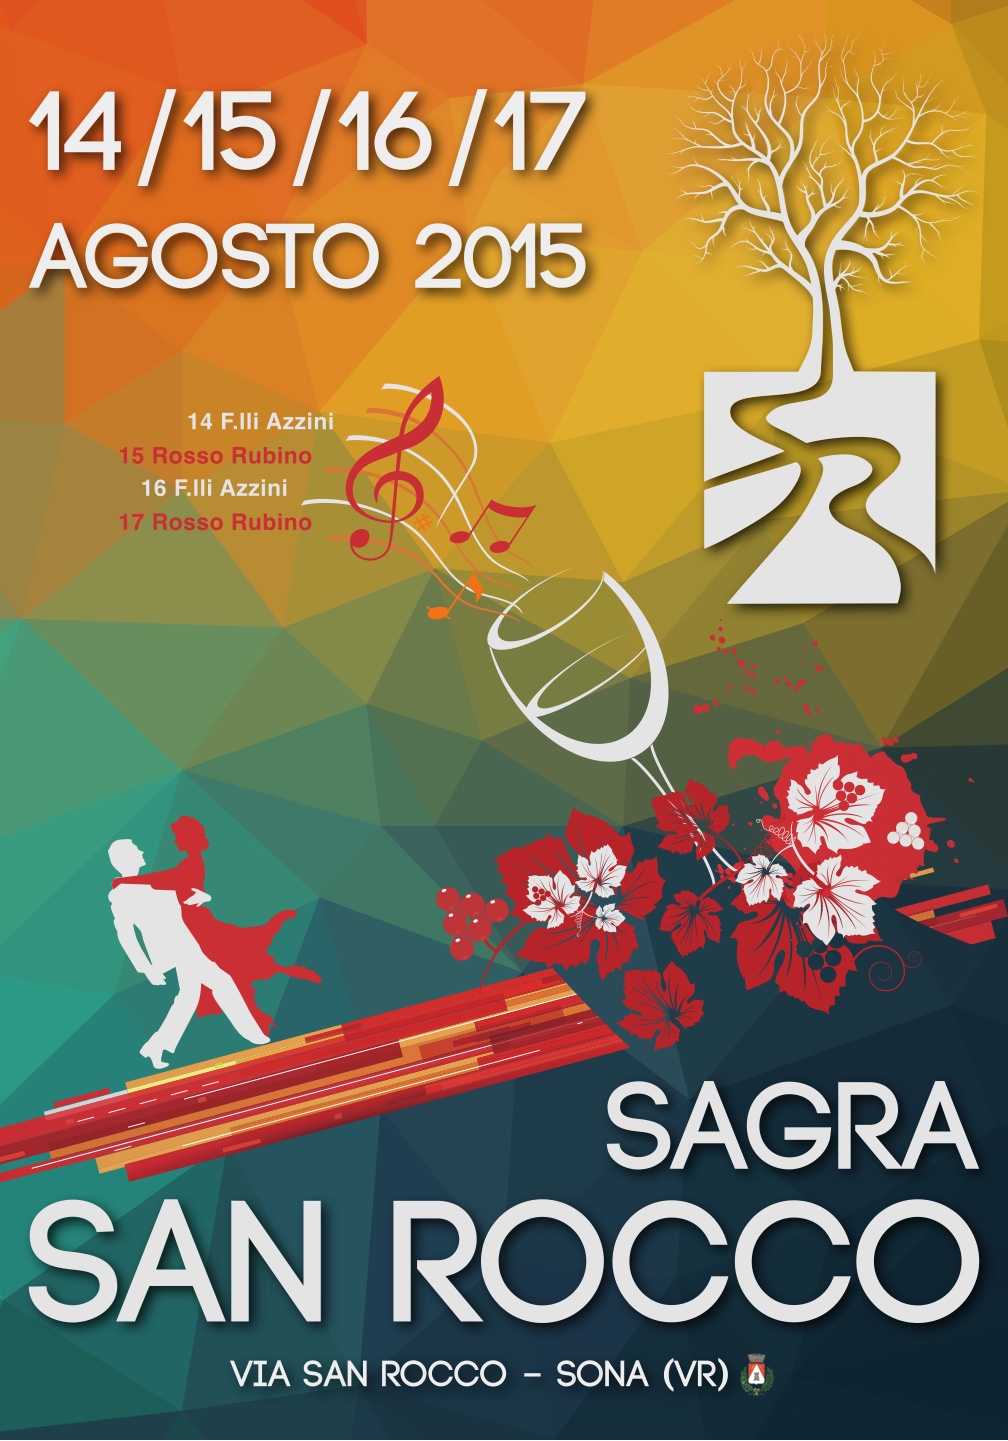 San Rocco 2015 print-2